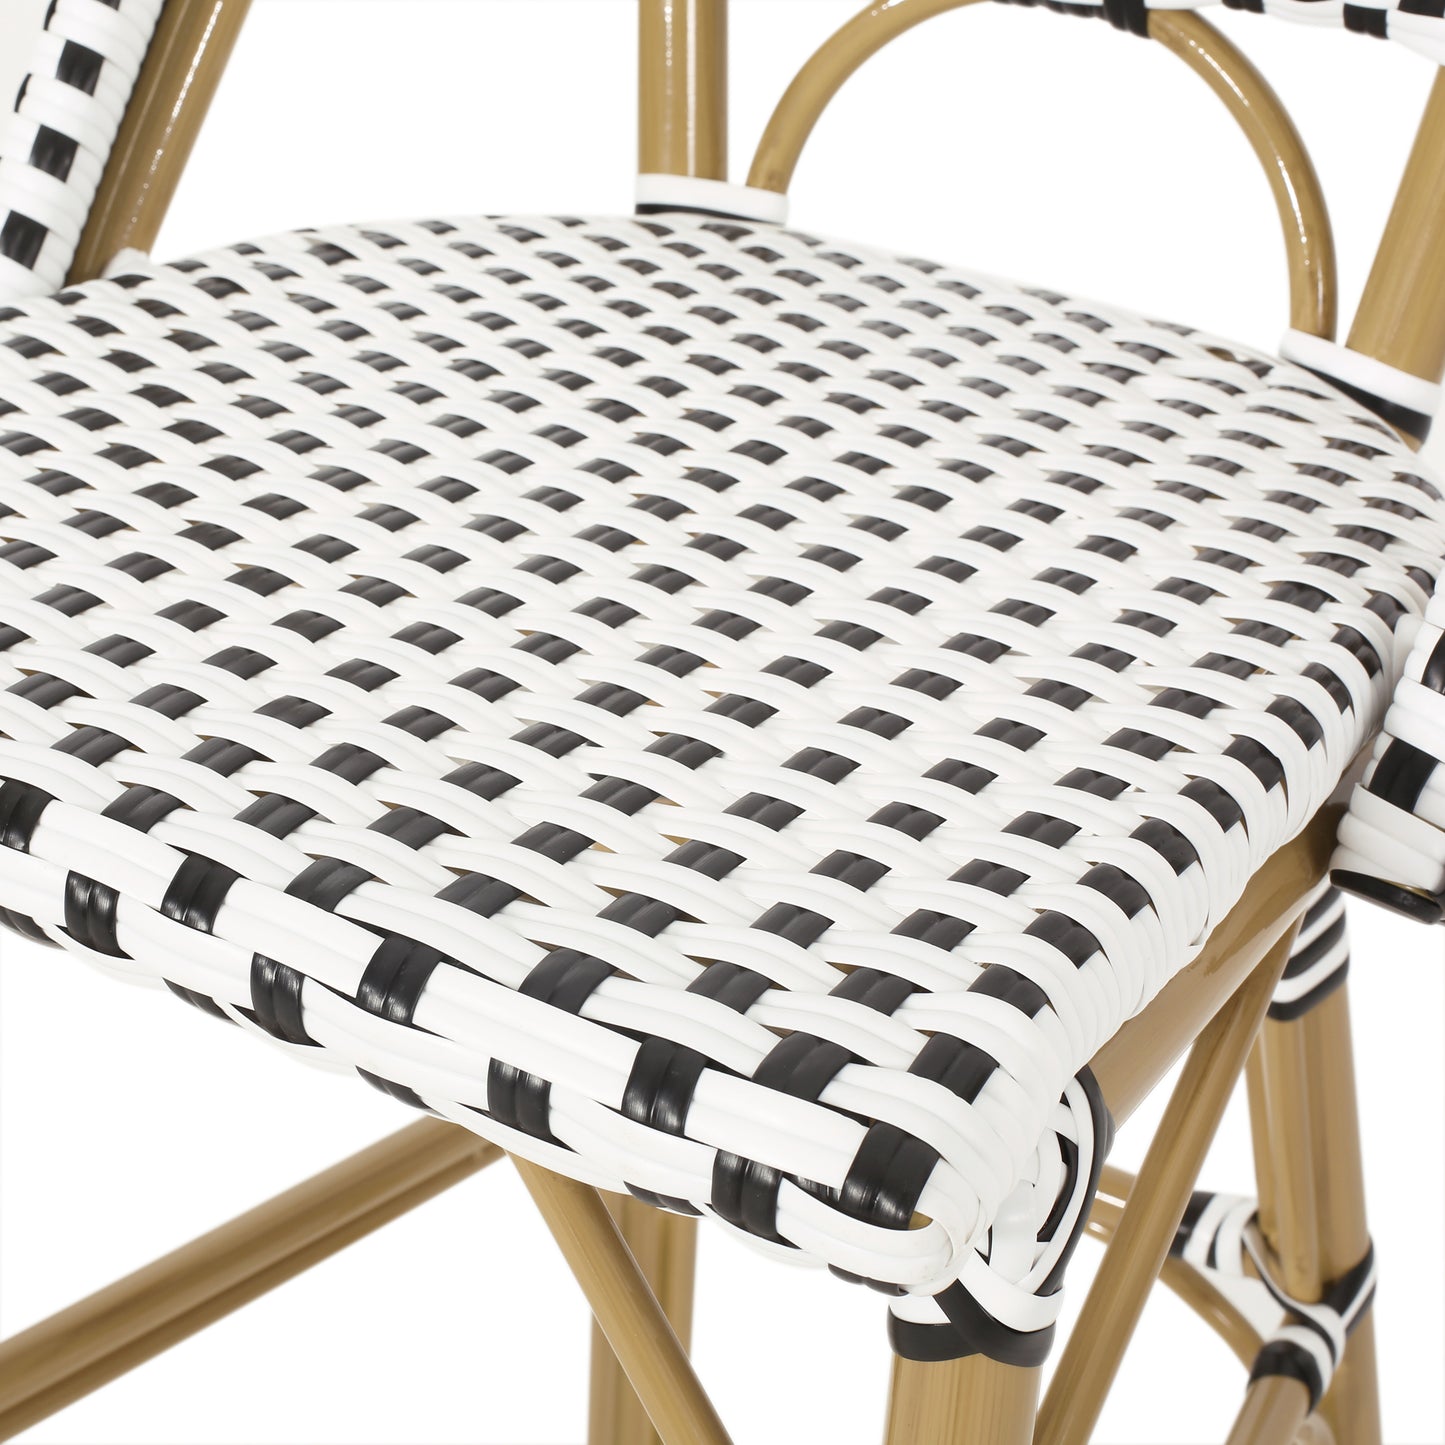 Grelton Outdoor Aluminum French Barstools, Set of 4